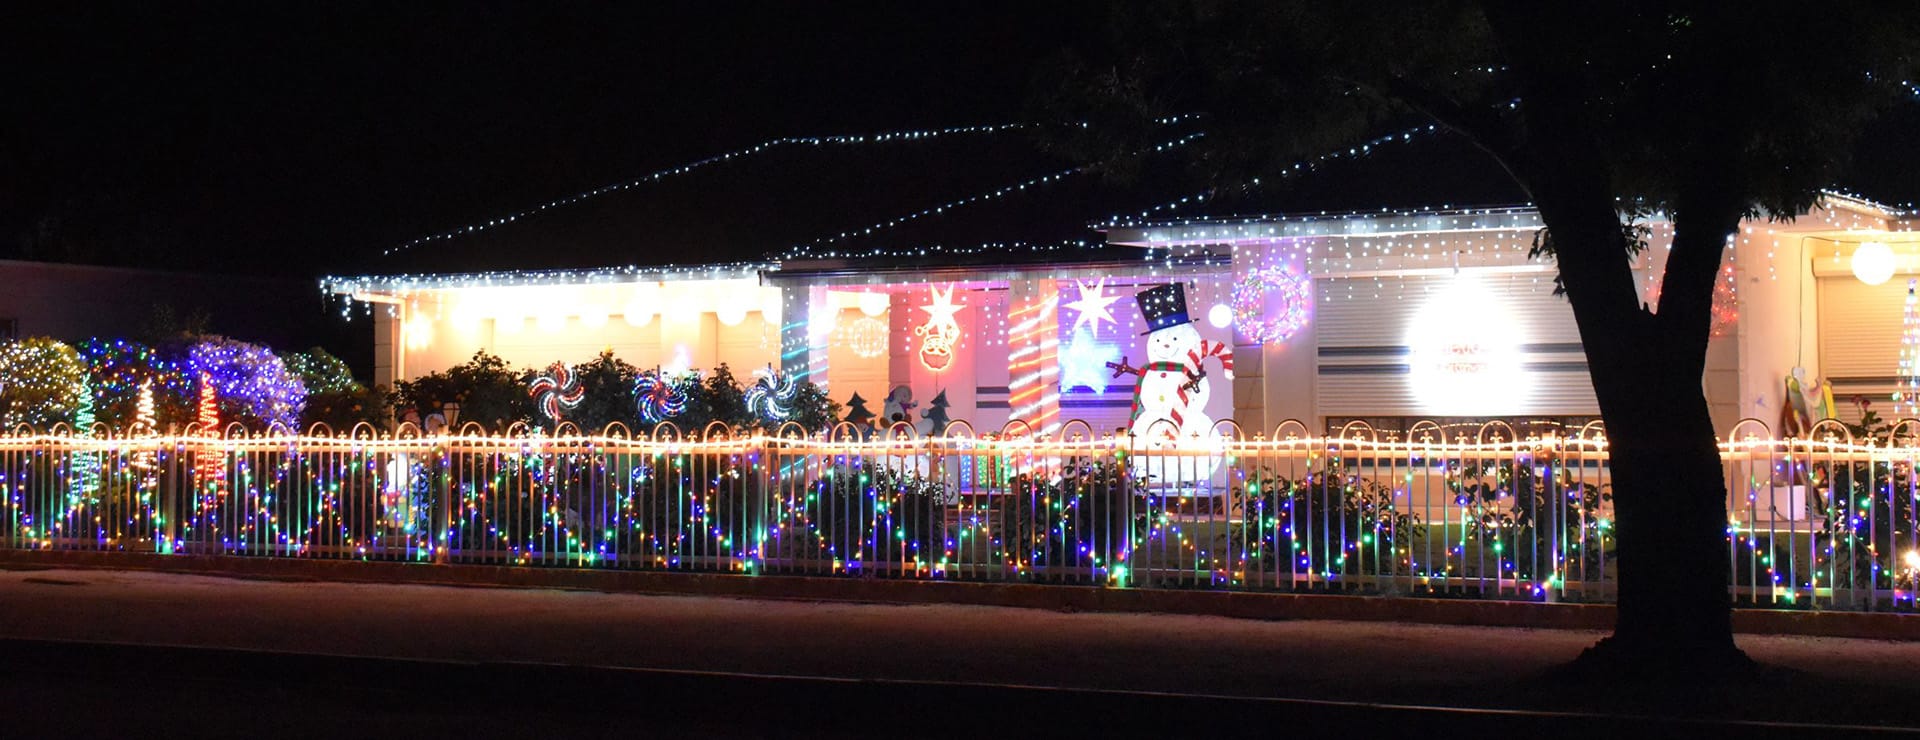 Loxton town lights. House lit at Christmas.